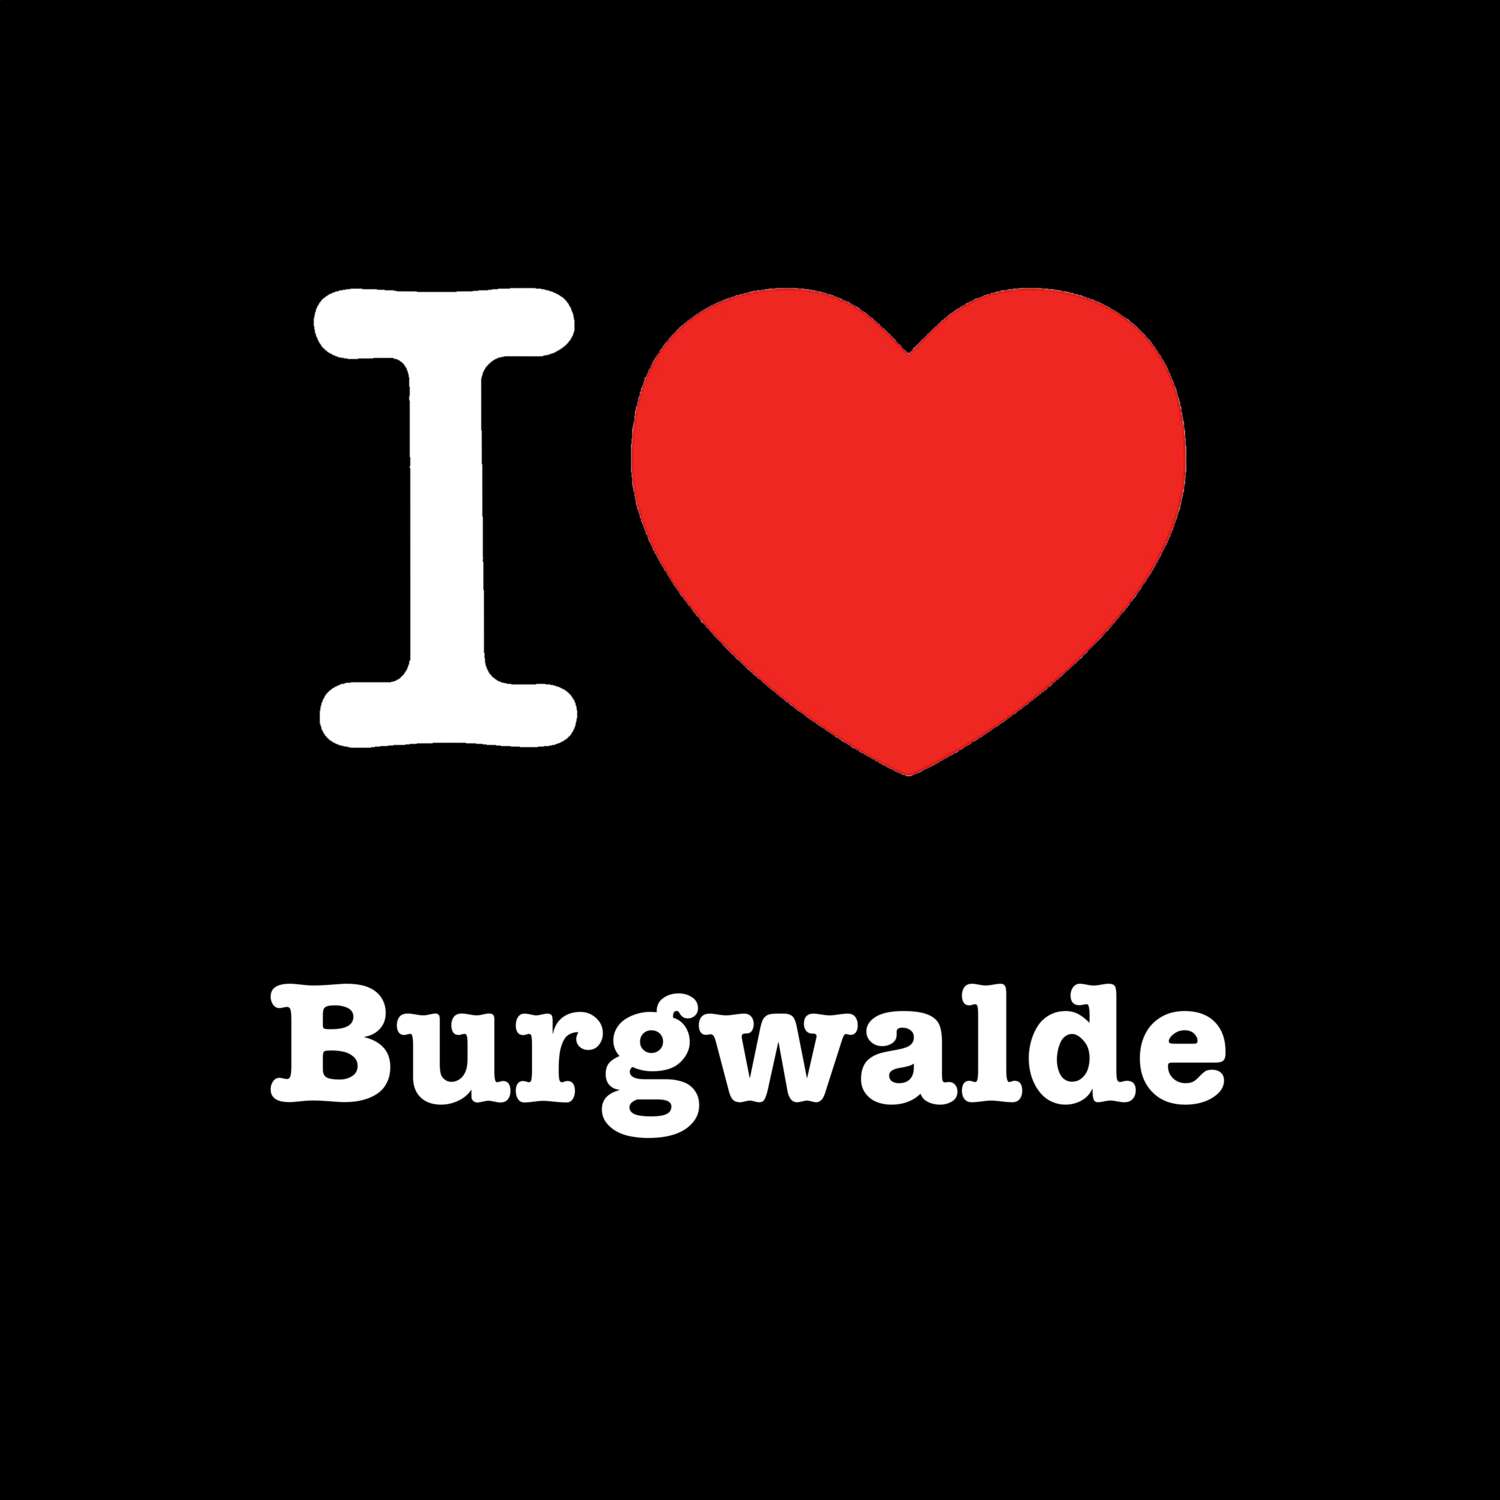 Burgwalde T-Shirt »I love«